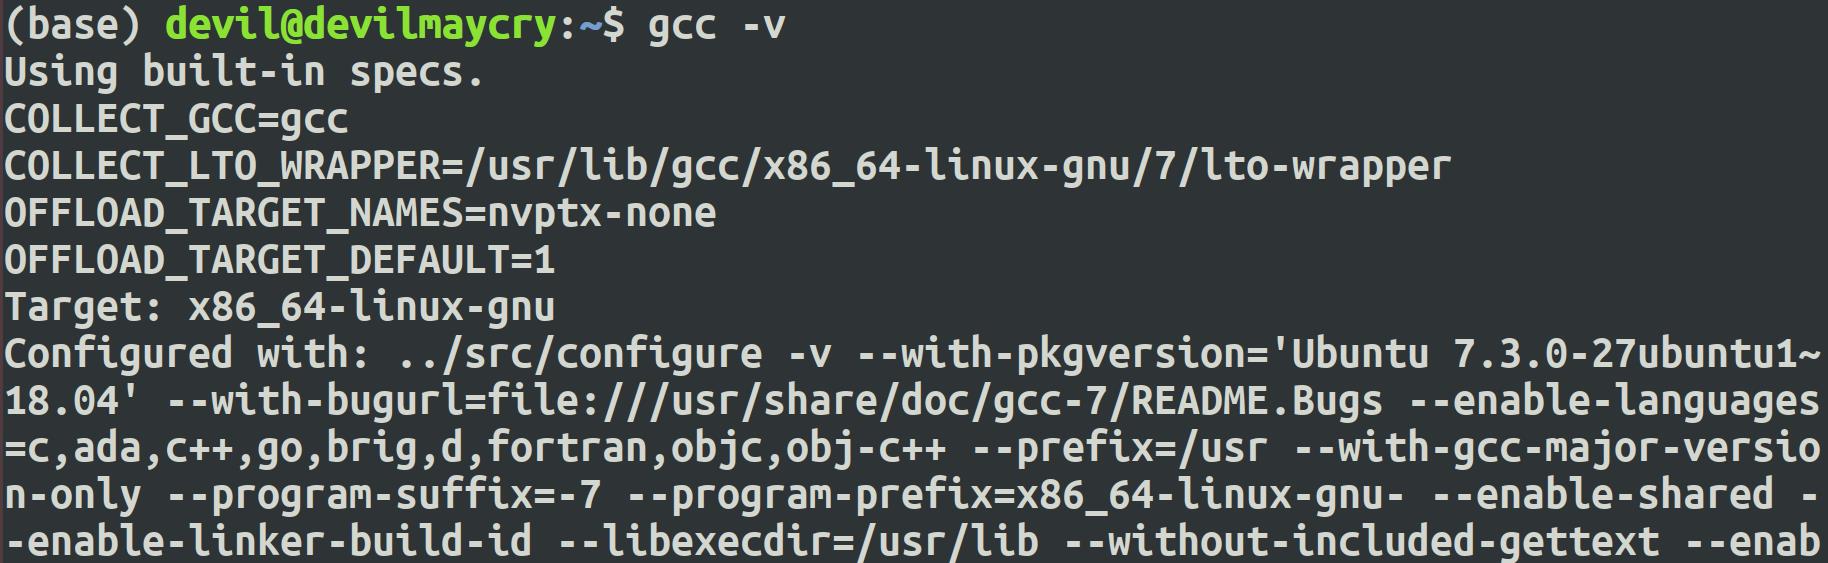 gcc/g++多版本切换 (ubuntu18.04) - 文章图片